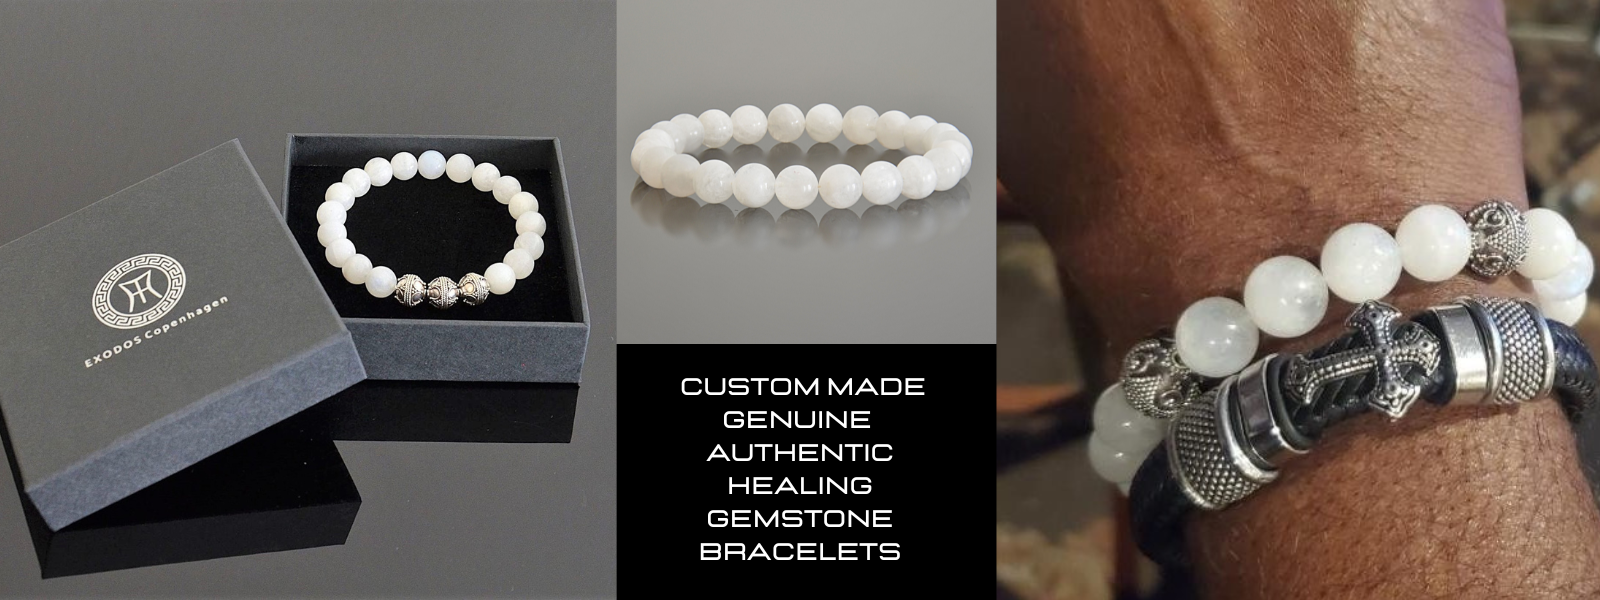 CUSTOM Morse Code Bracelet / MORSE Code Jewelry / Friendship bracelets /  Your Design / Your Message